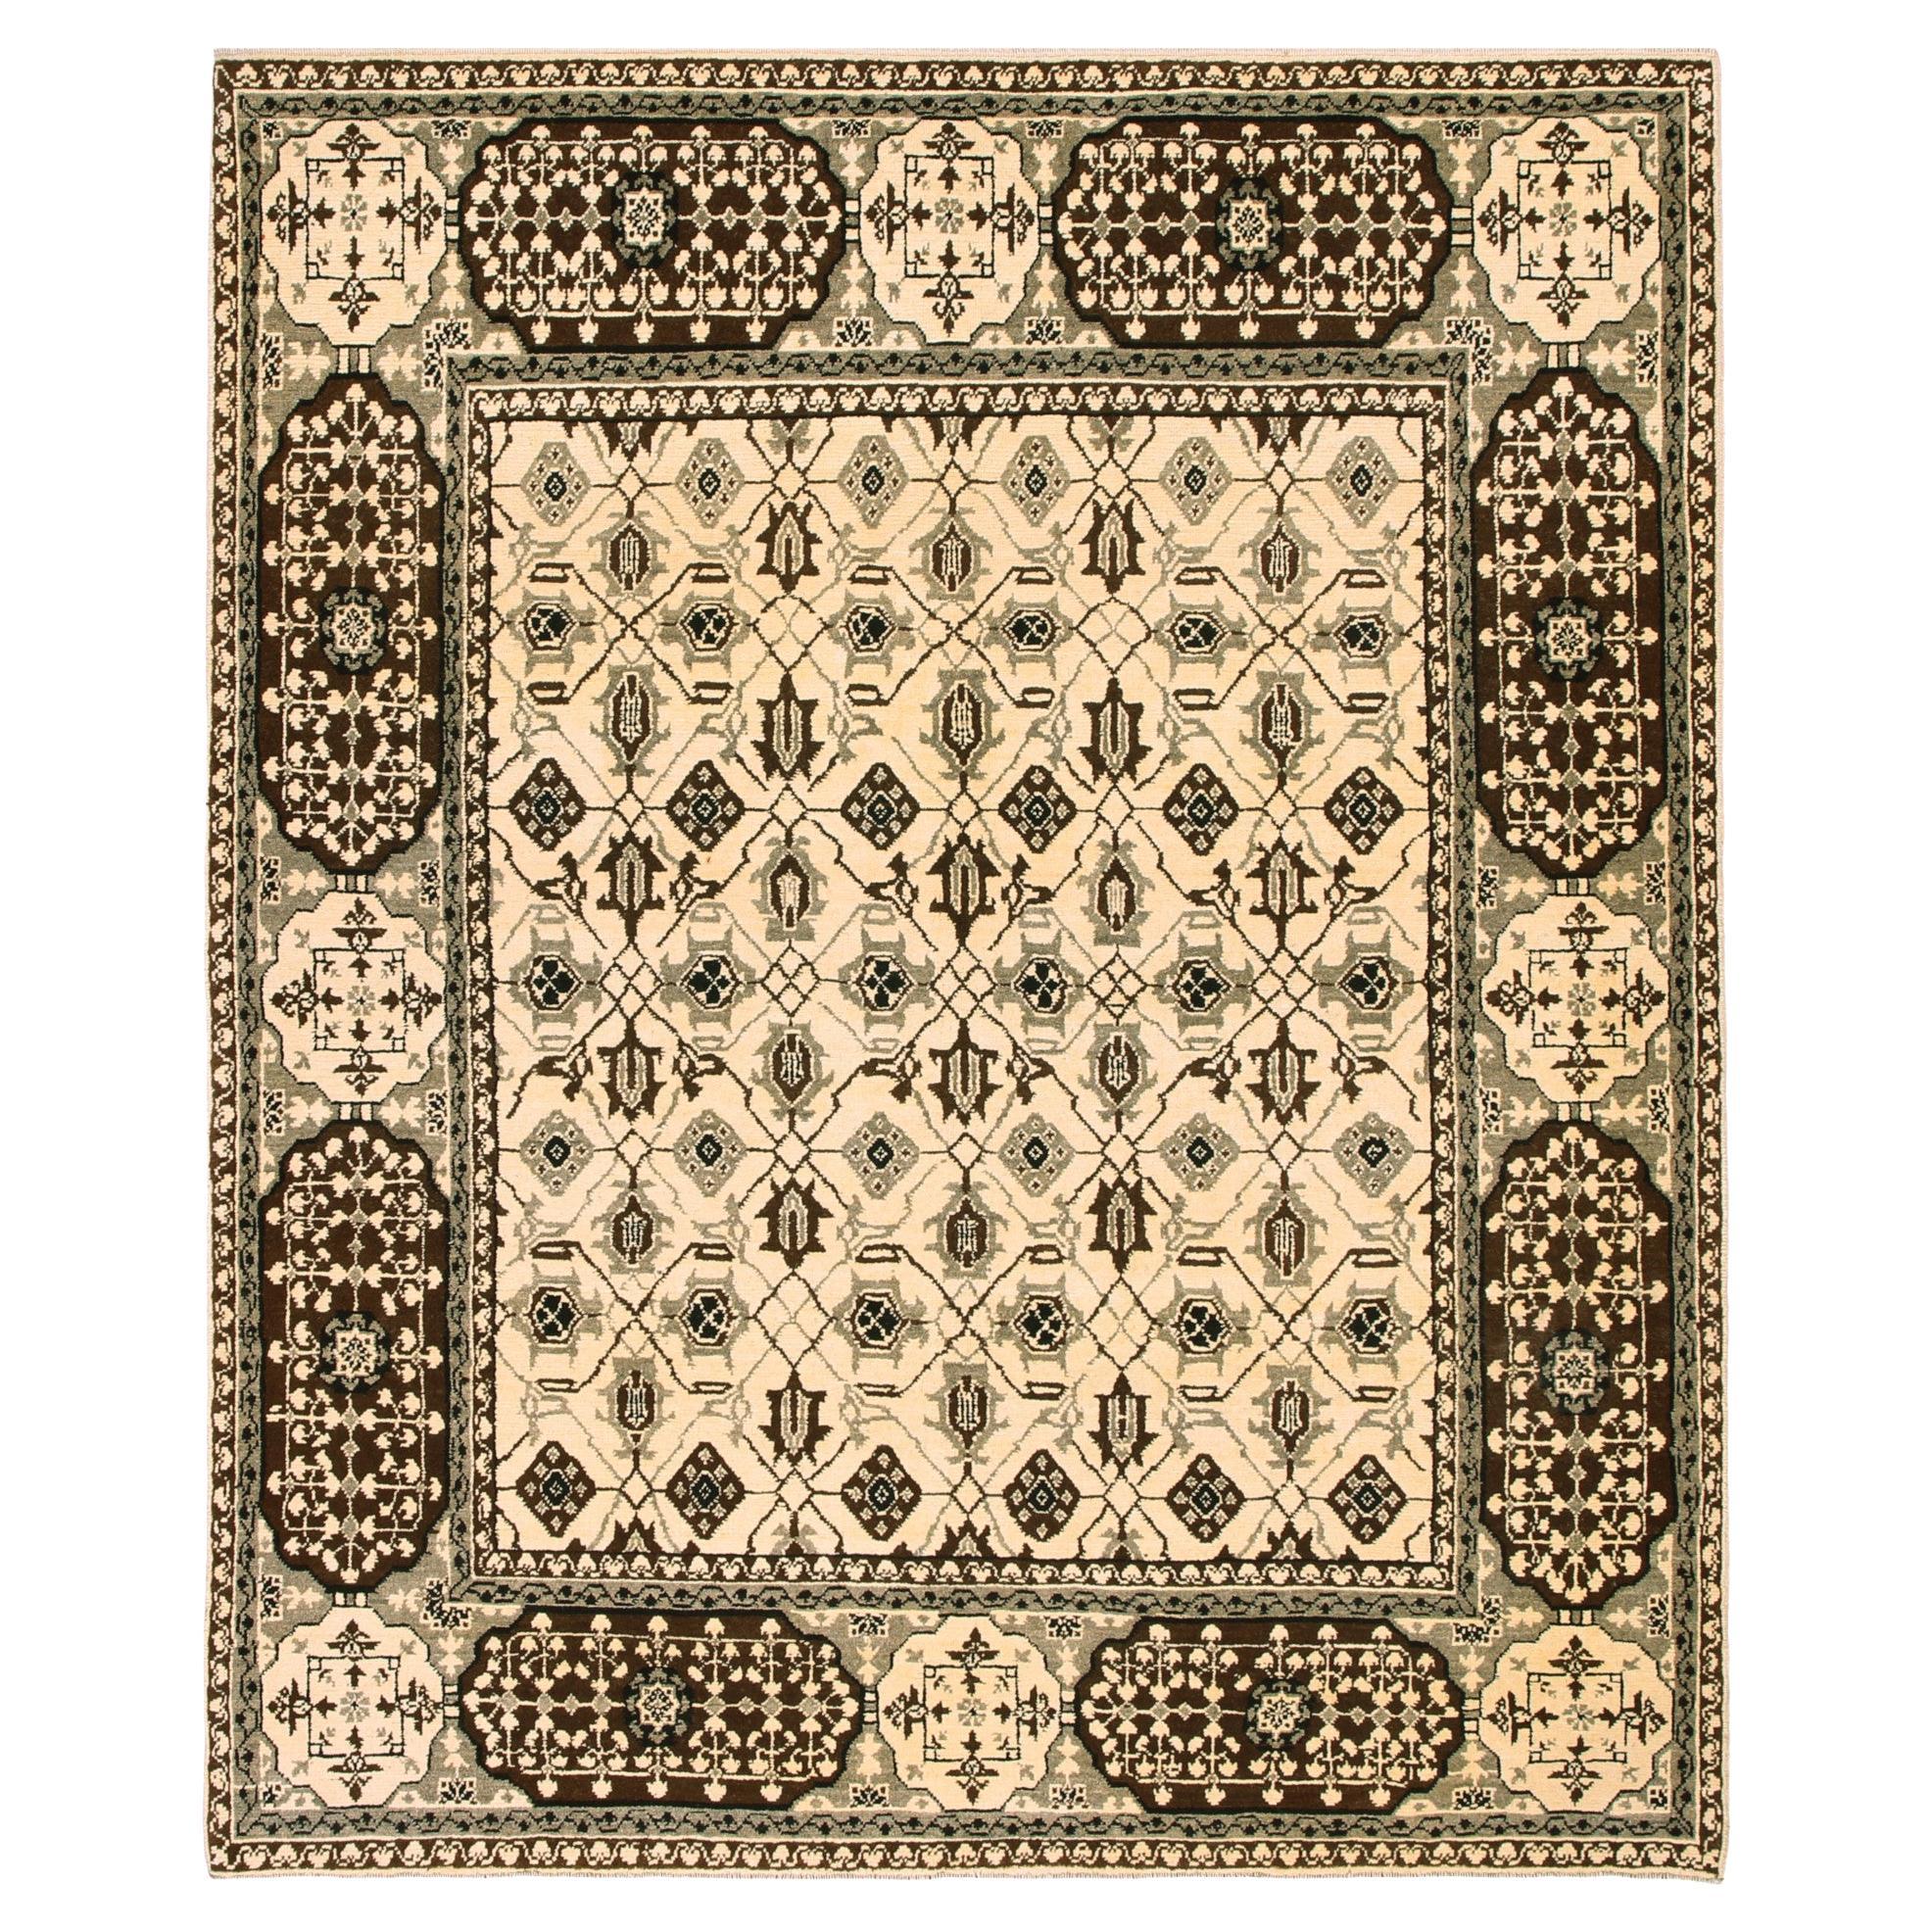 Ararat Rugs Mamluk Carpet with Lattice Design, Natural Sheep Wool Colors No Dye